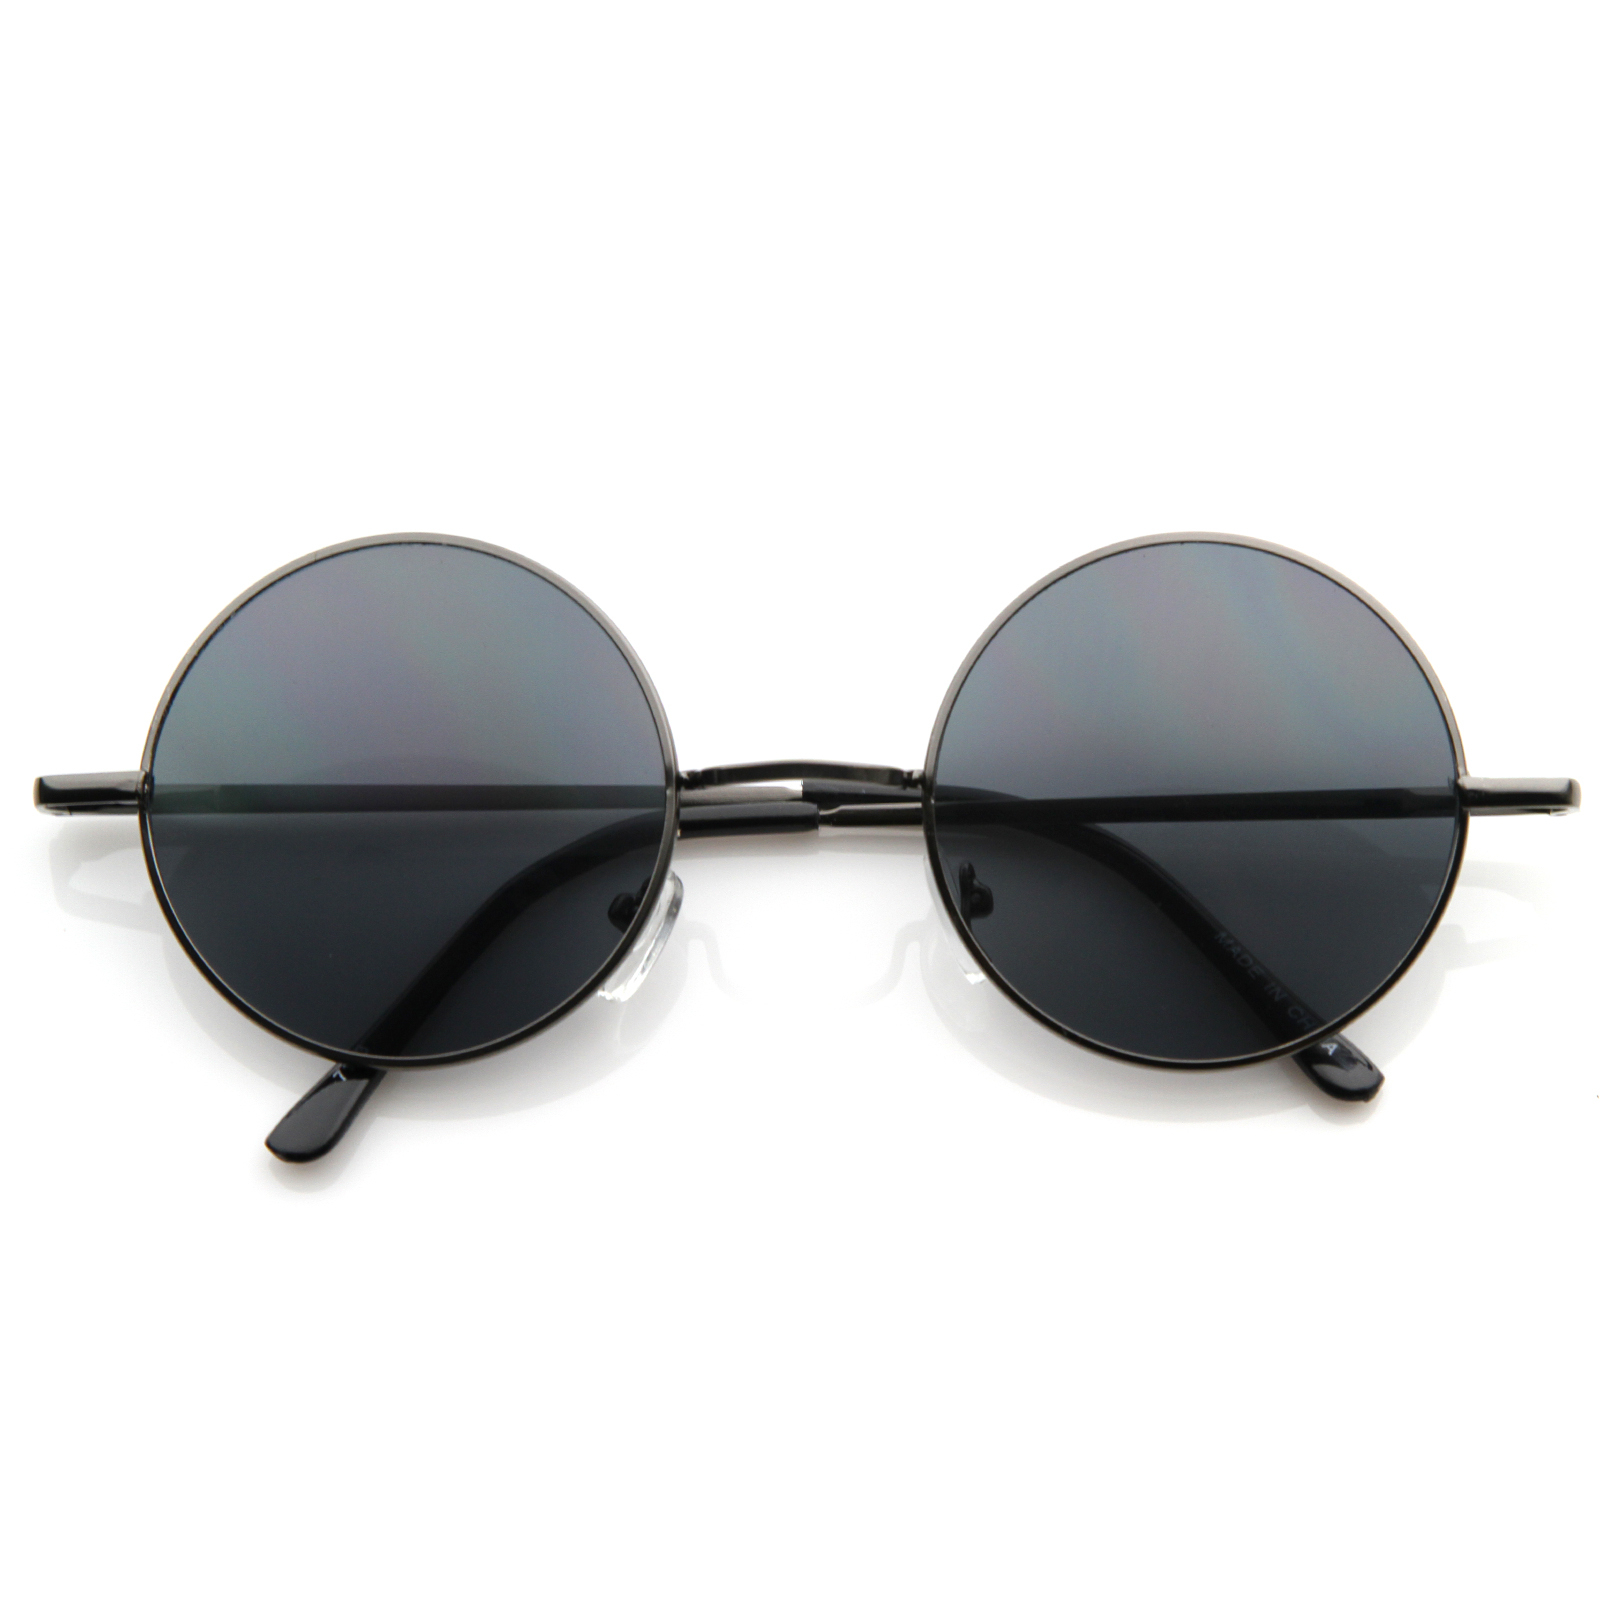 Lennon Style Round Circle Metal Sunglasses W/ Color Lens Tint - Gunmetal Smoke